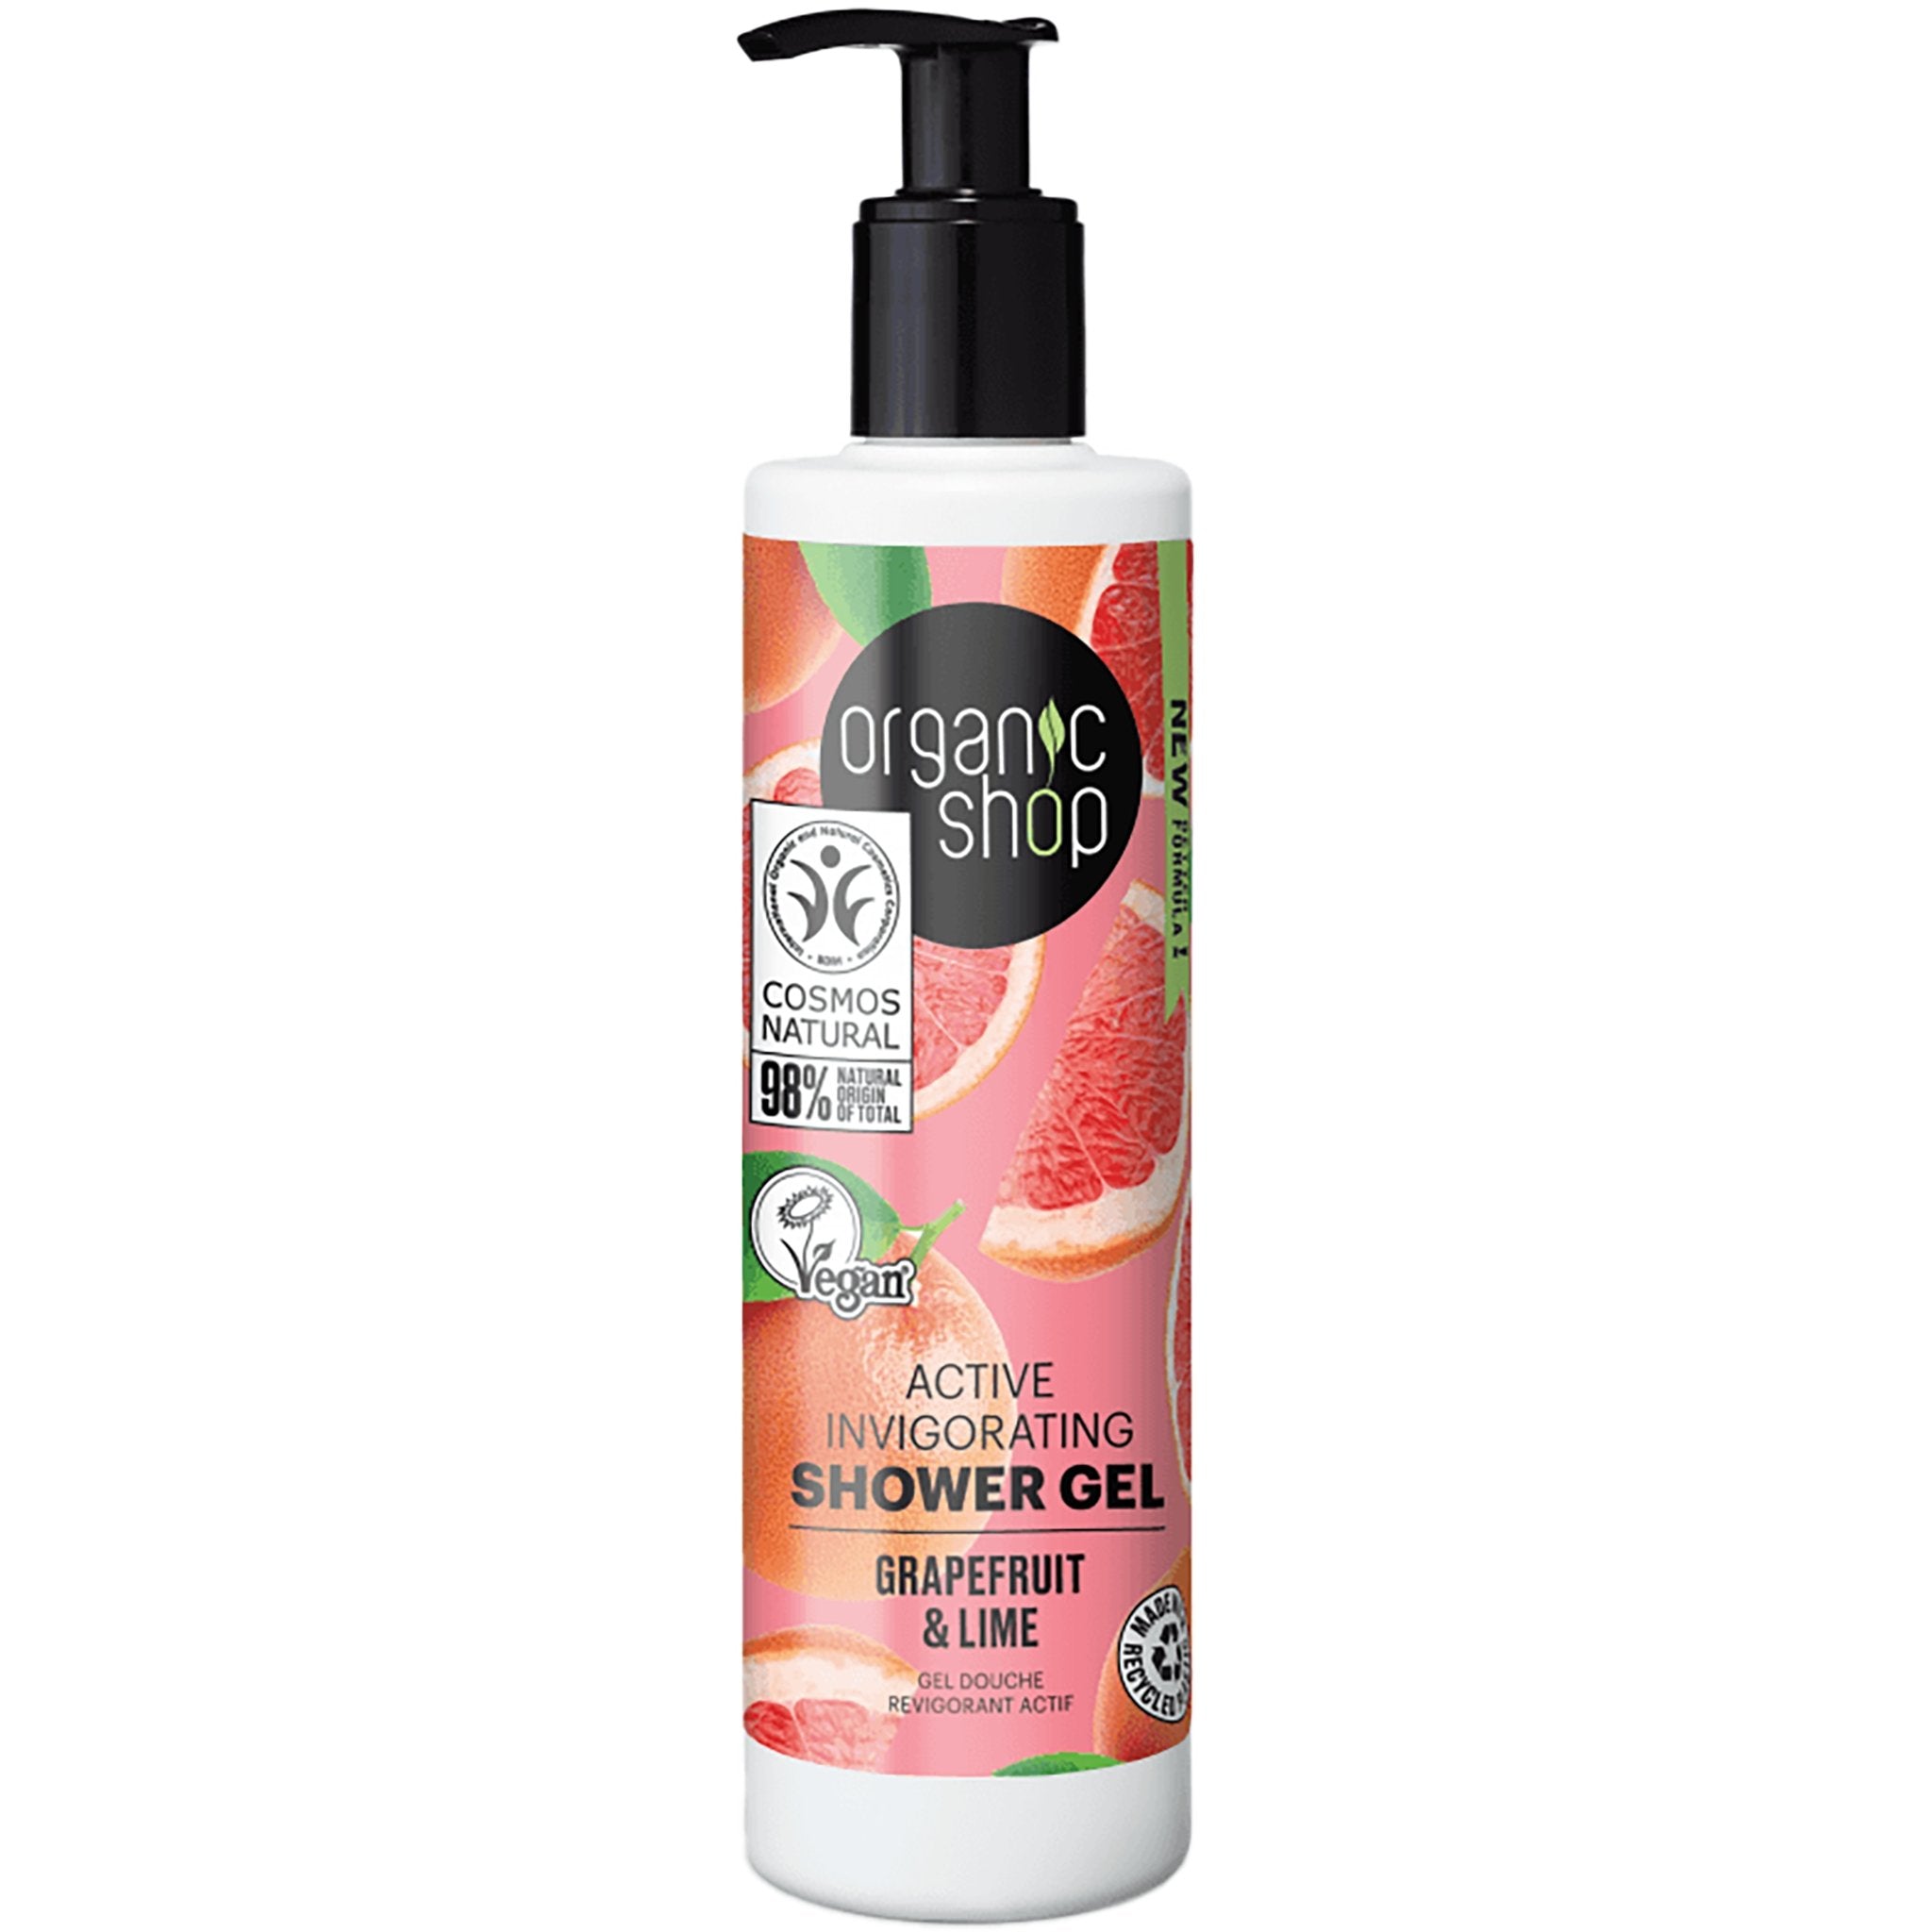 Active Invigorating Shower Gel - Grapefruit & Lime - mypure.co.uk